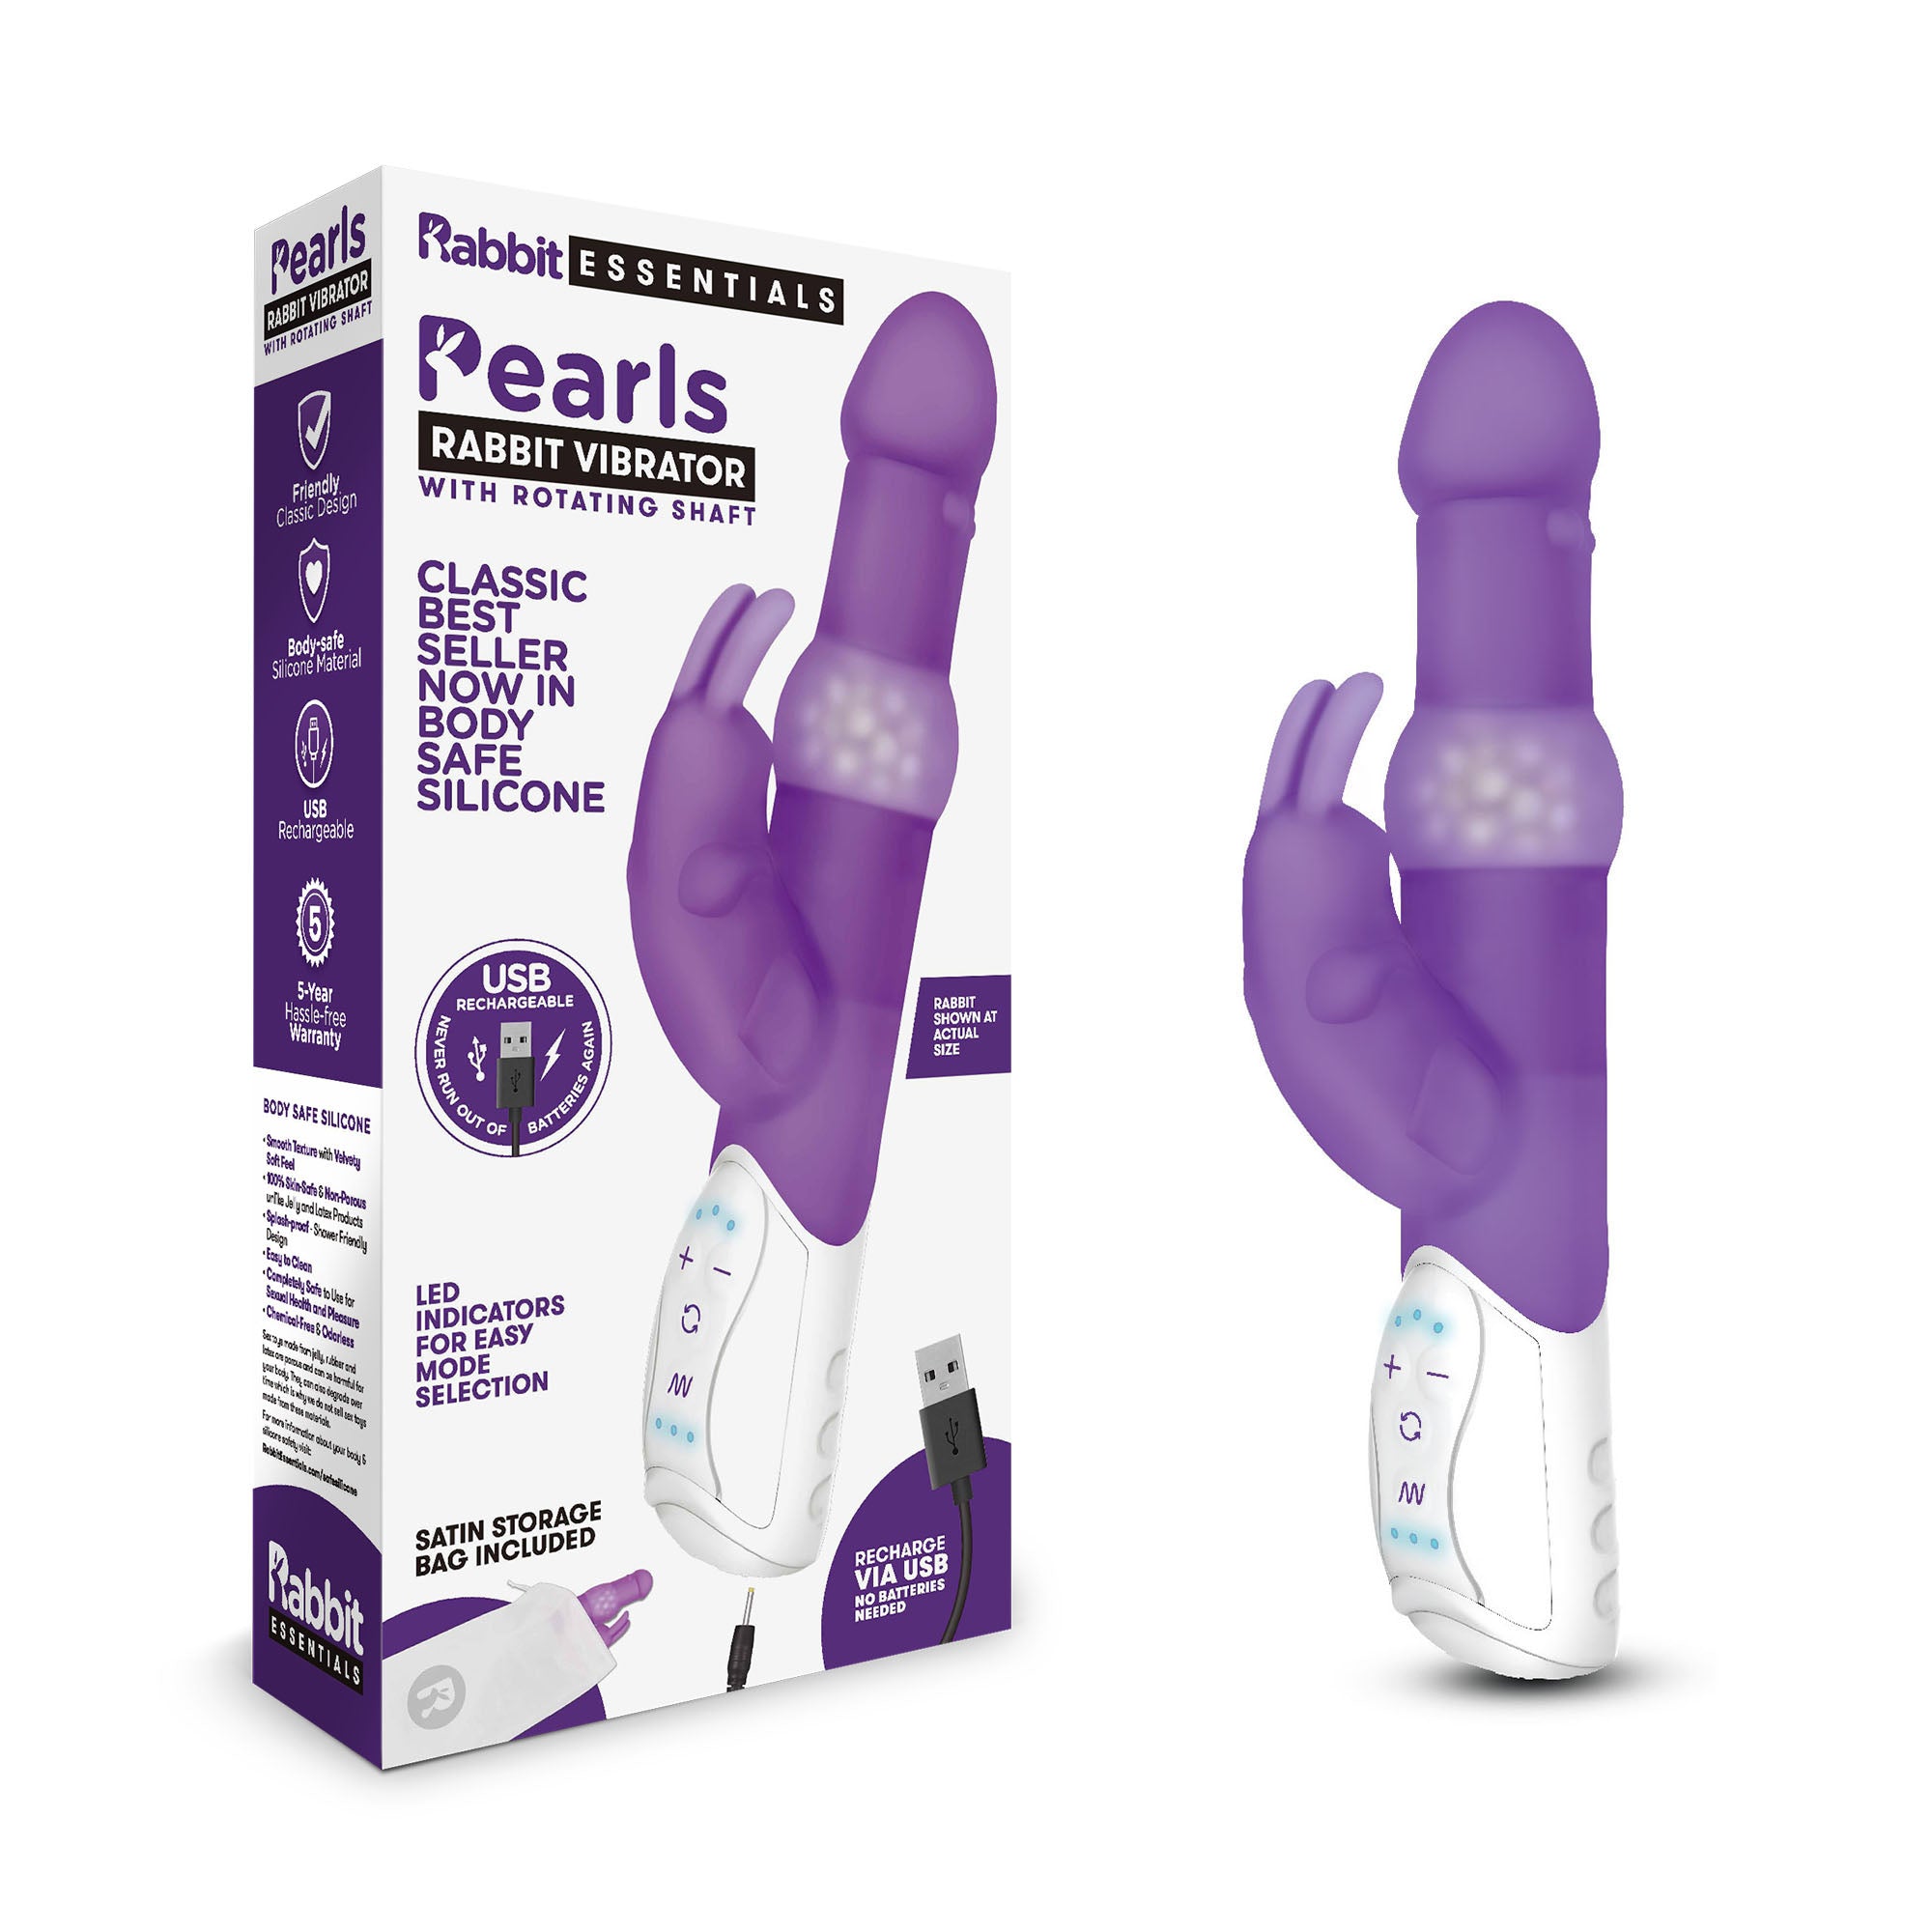 Rabbit Essentials Pearls Rabbit Vibrator with Rotating Shaft Purple